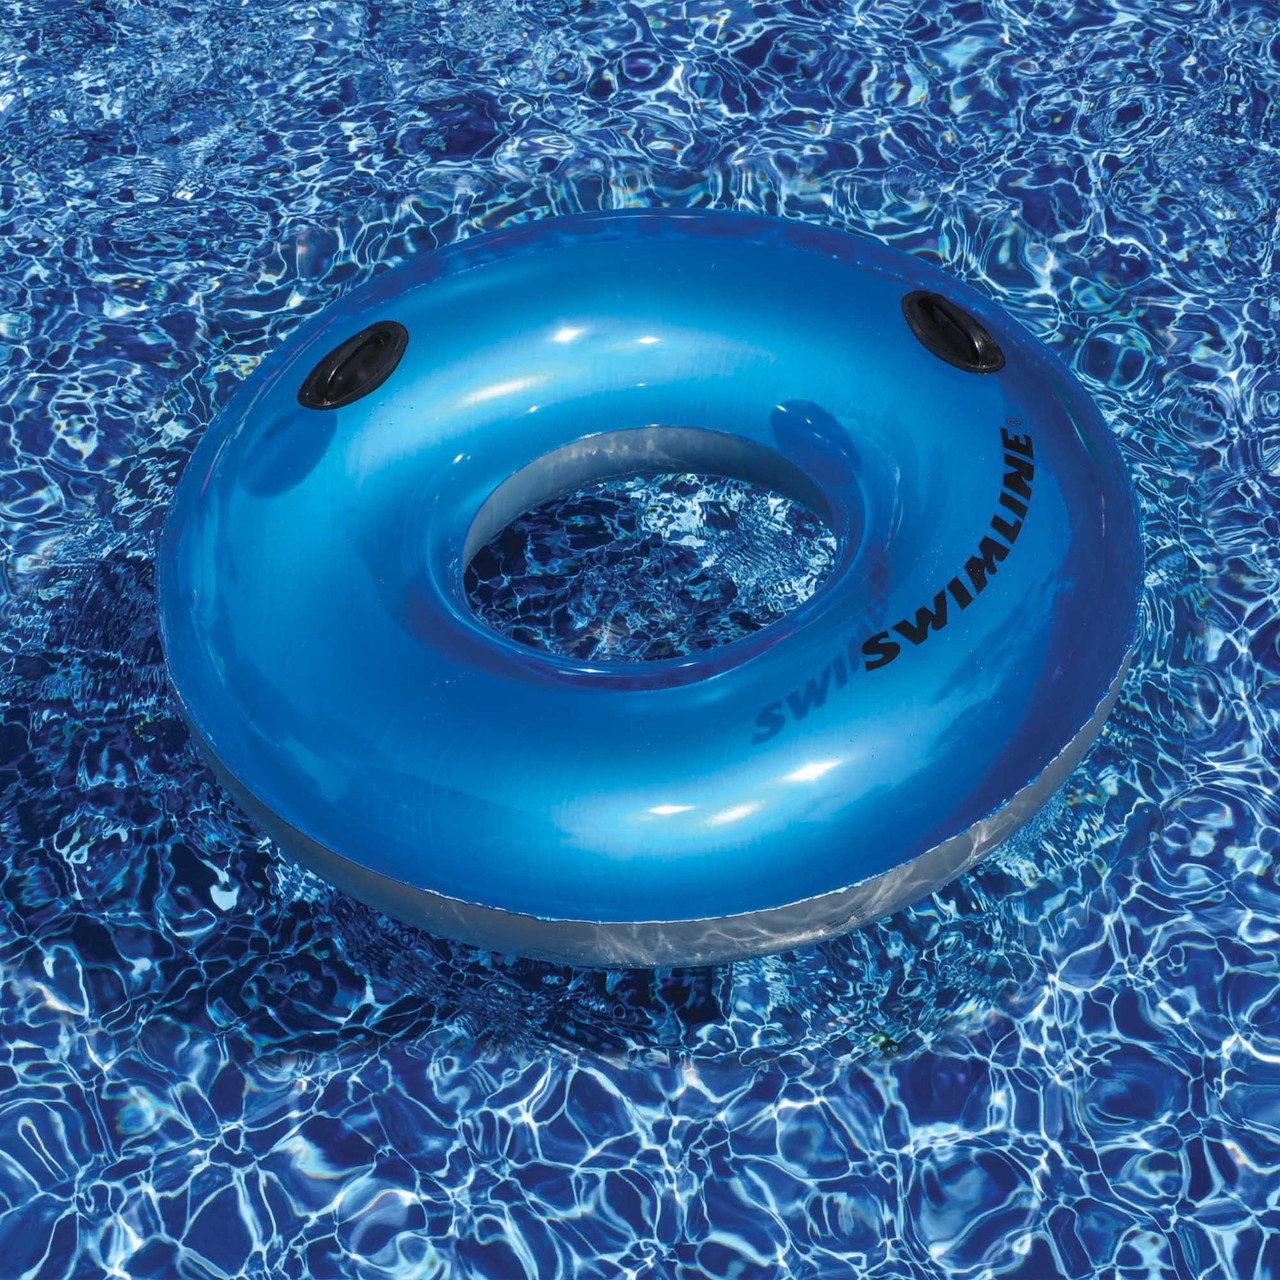 Foam Life Saver Ring Swimming Pool Safety Bouy